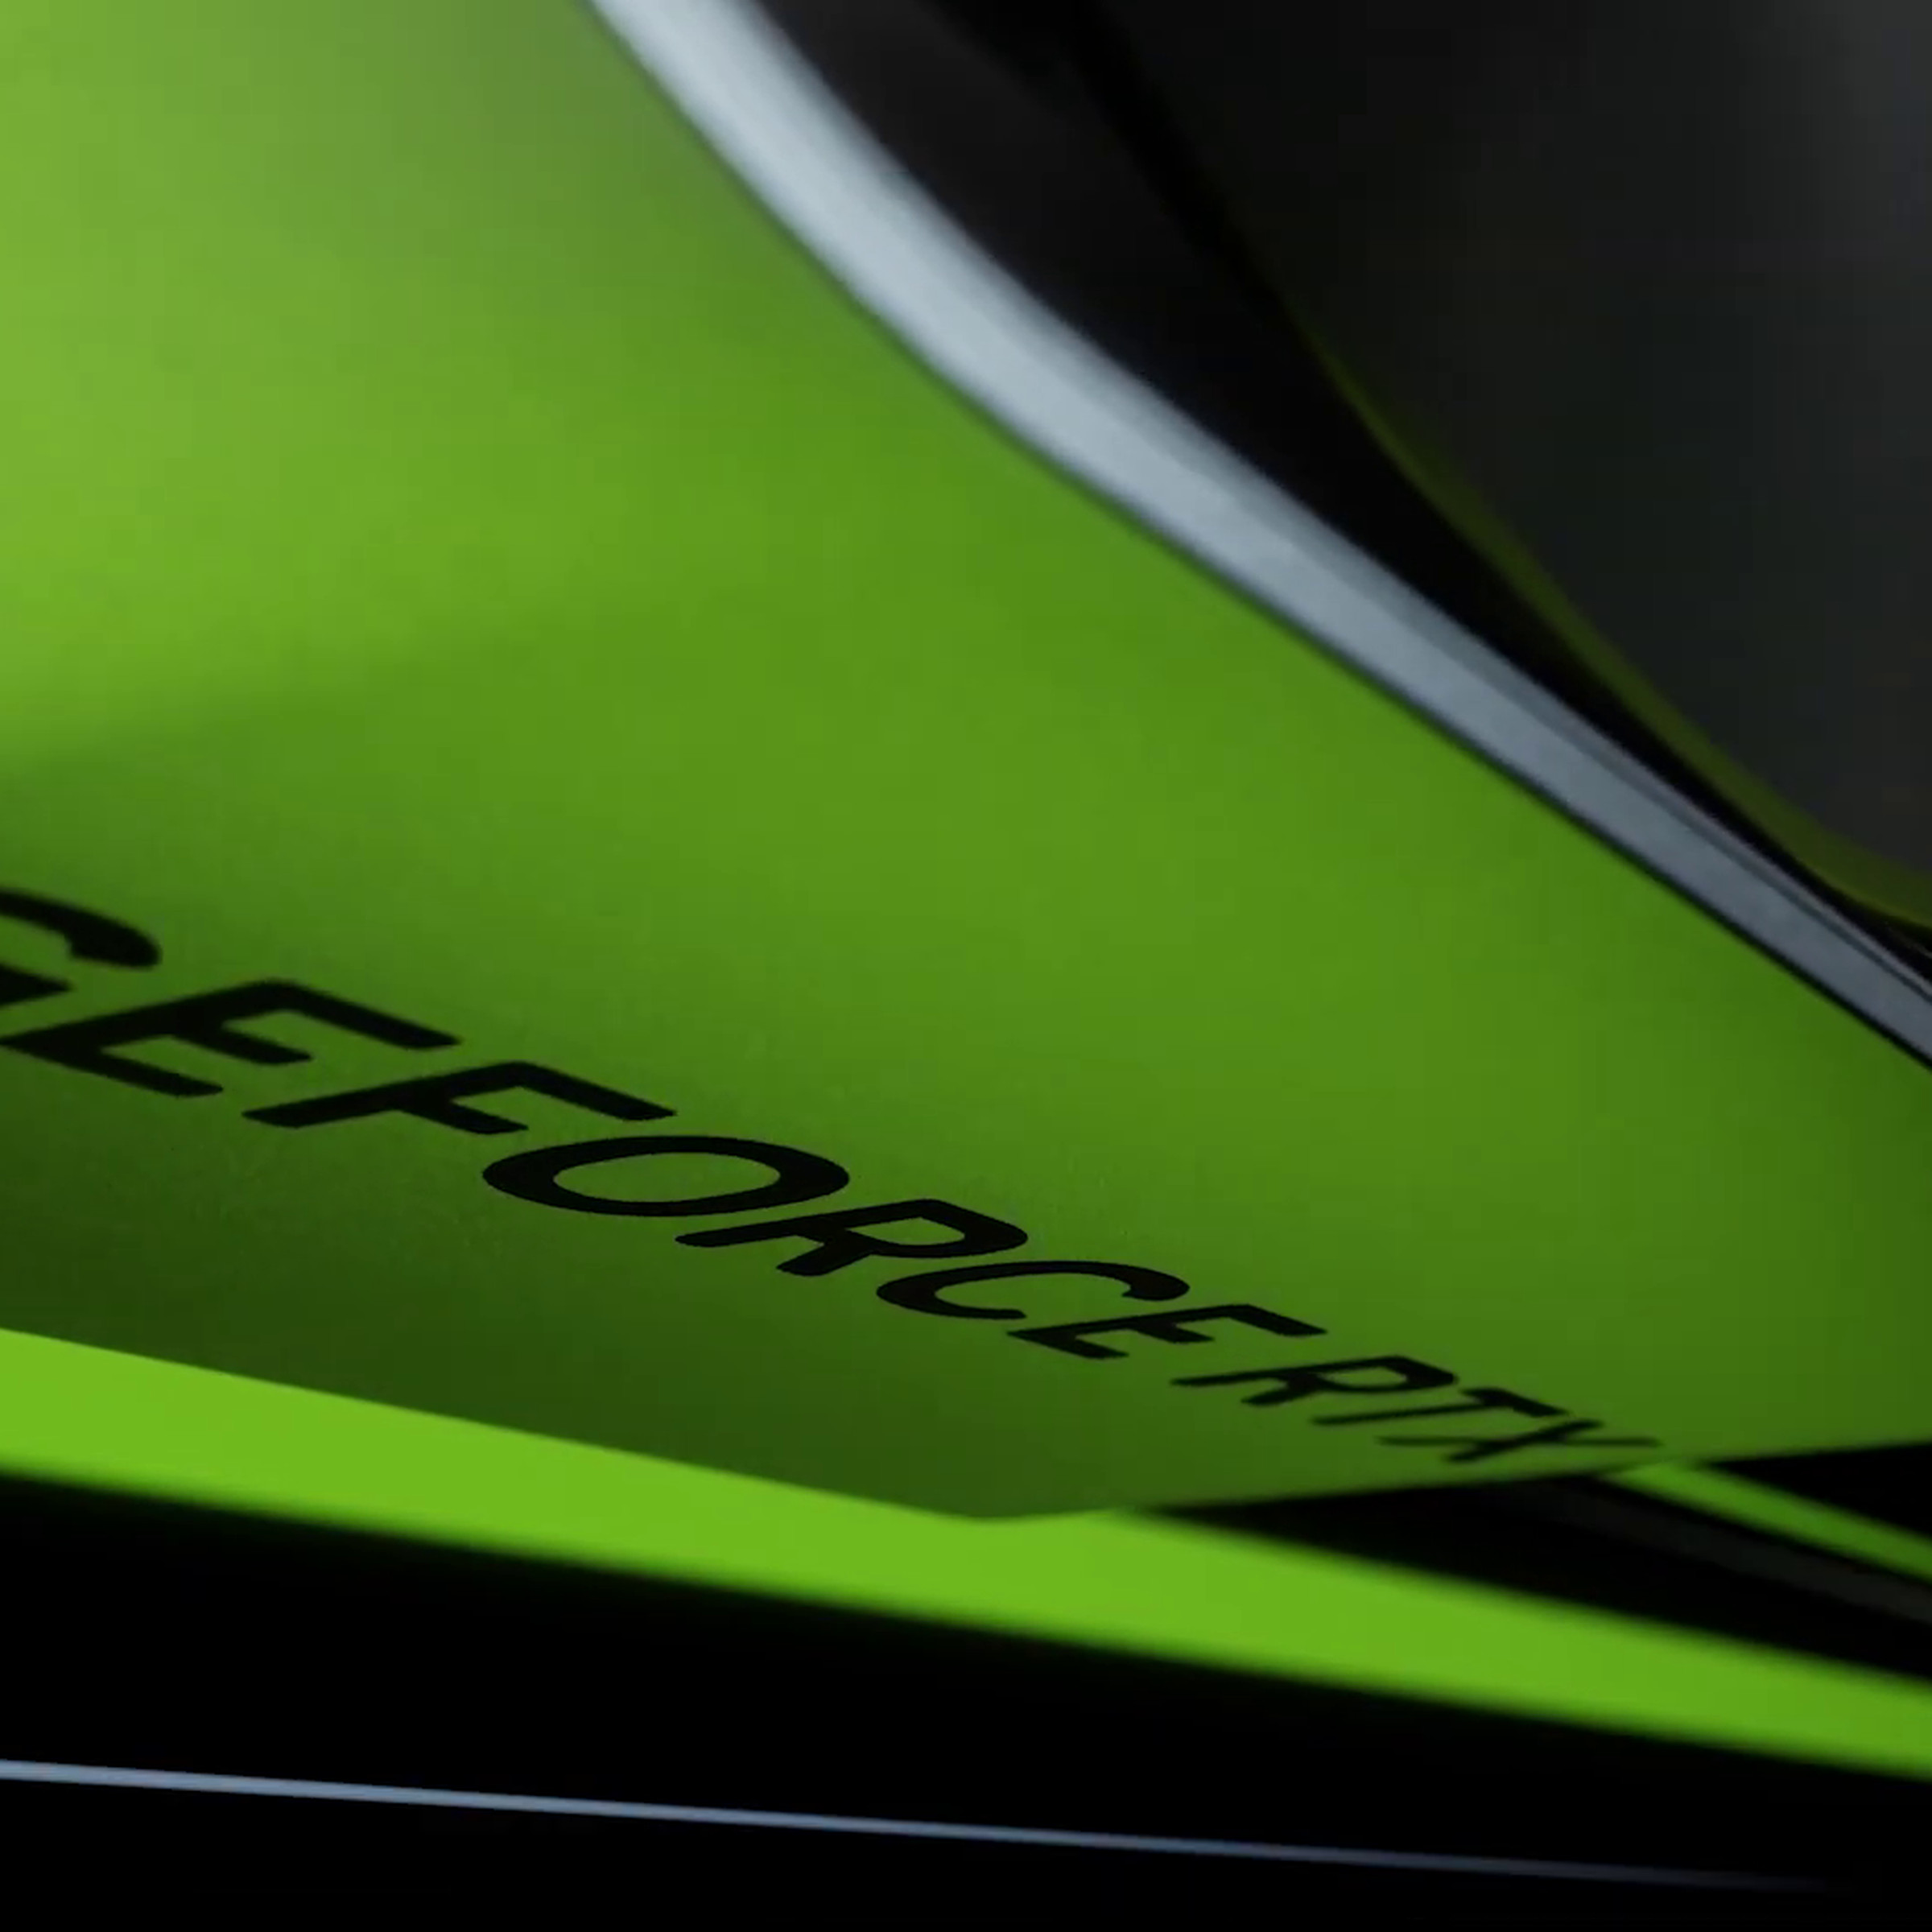 A metal GPU shroud reading GeForce RTX lit up green.